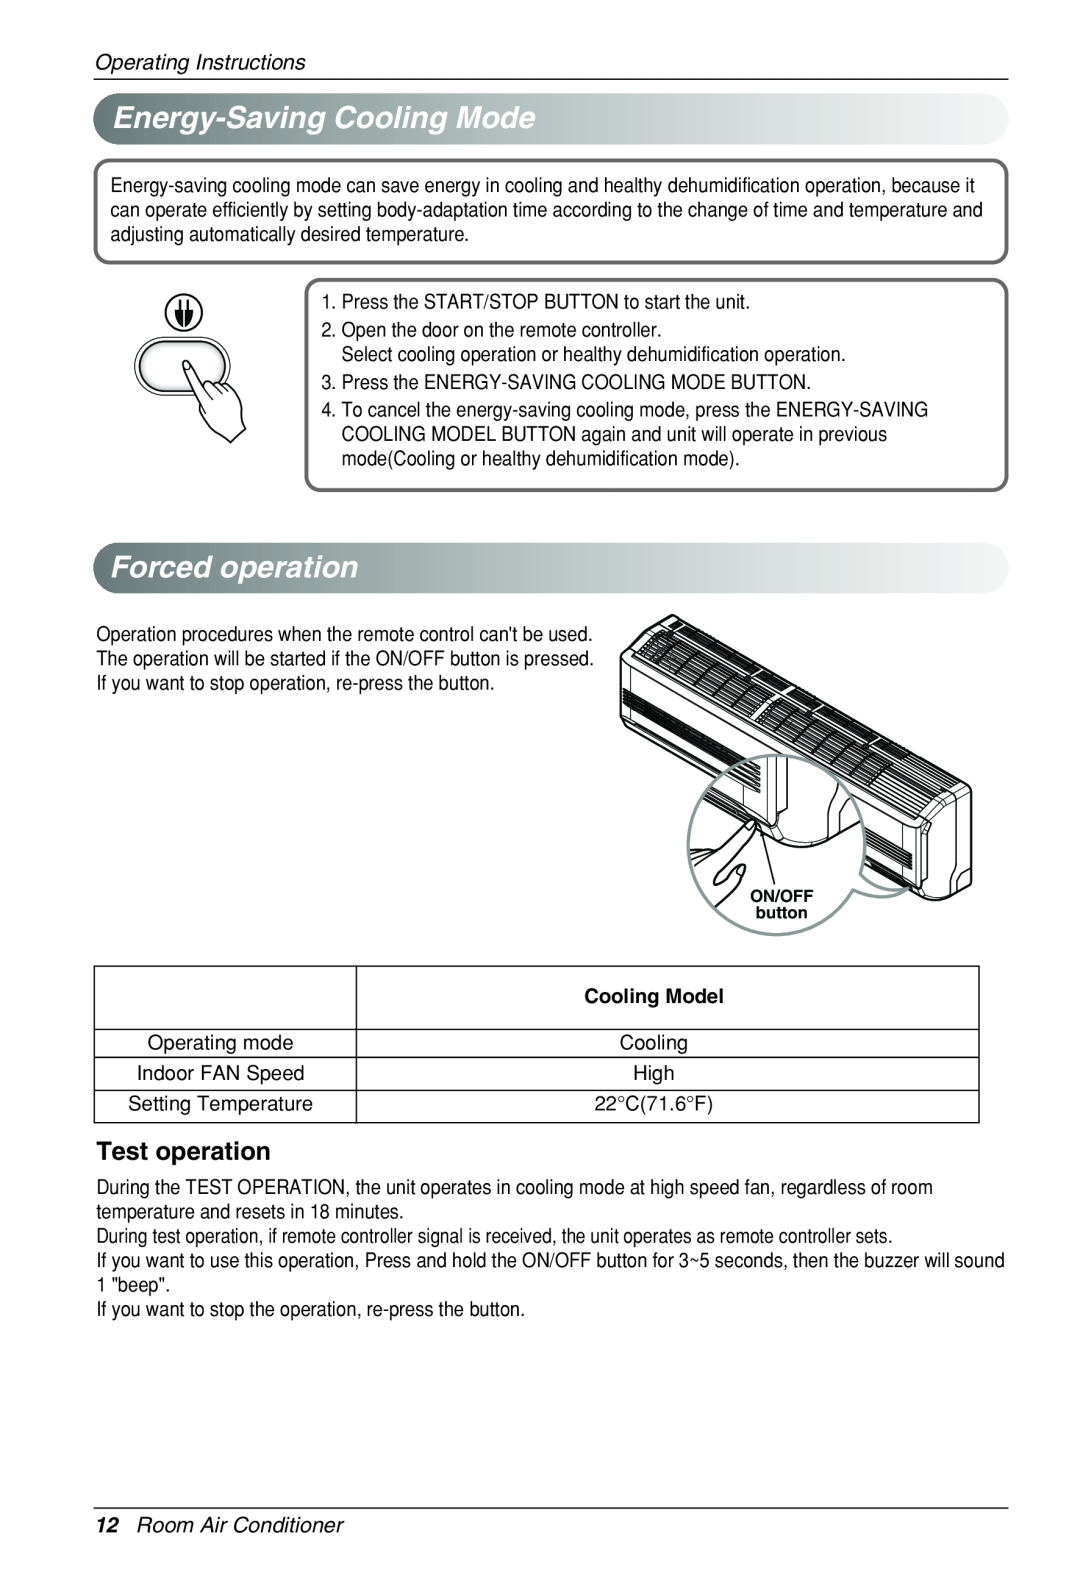 Heat Controller VMC30SB-1 manual Energy-SavingCoolingMode, Forcedoperation, Test operation, Operating Instructions 